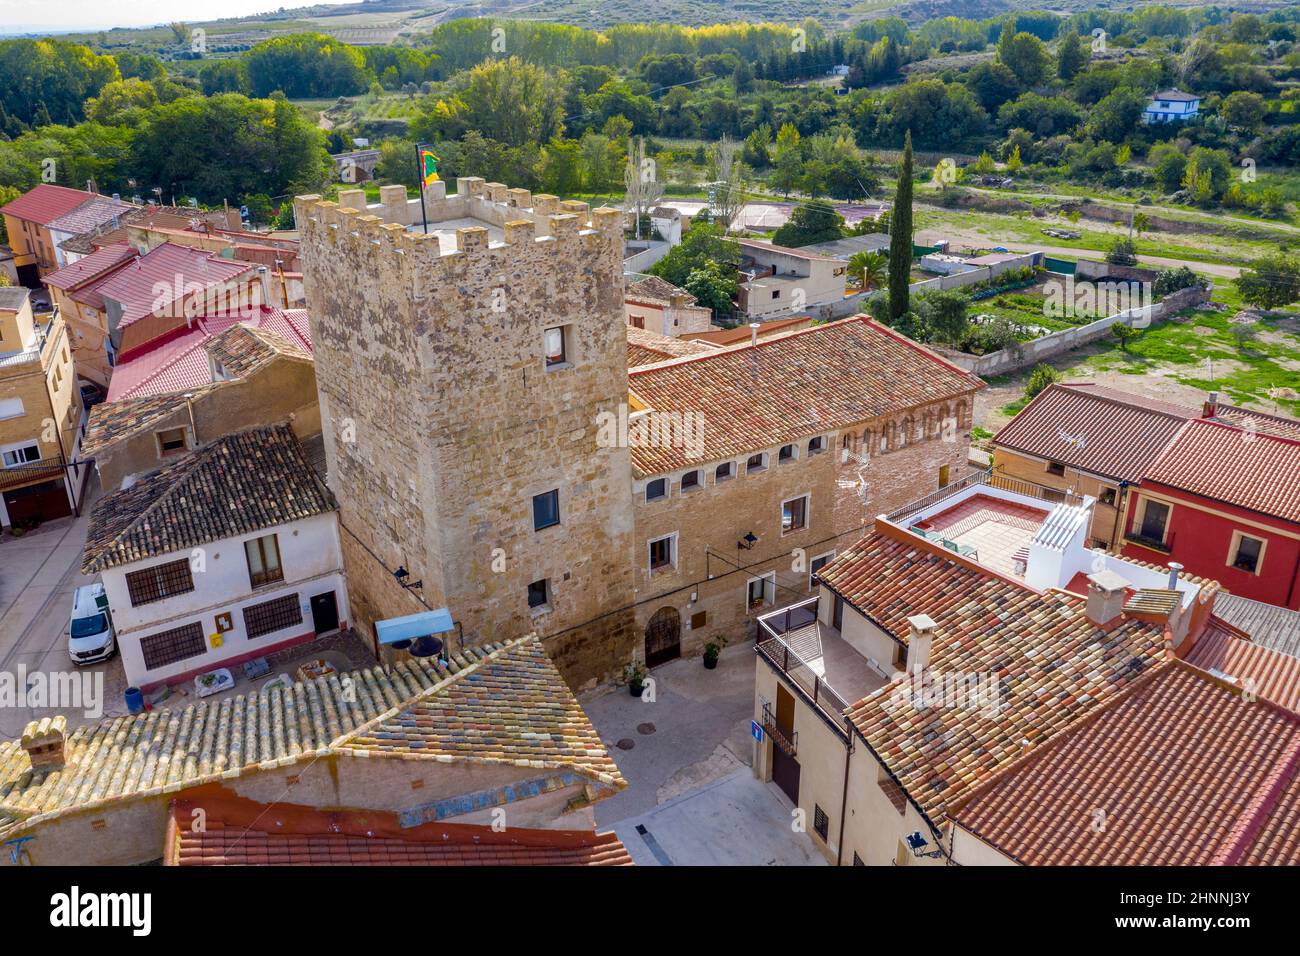 Castle Palace of Bulbuente, in the Campo de Borja region, Zaragoza, Spain, with the Moncayo Stock Photo